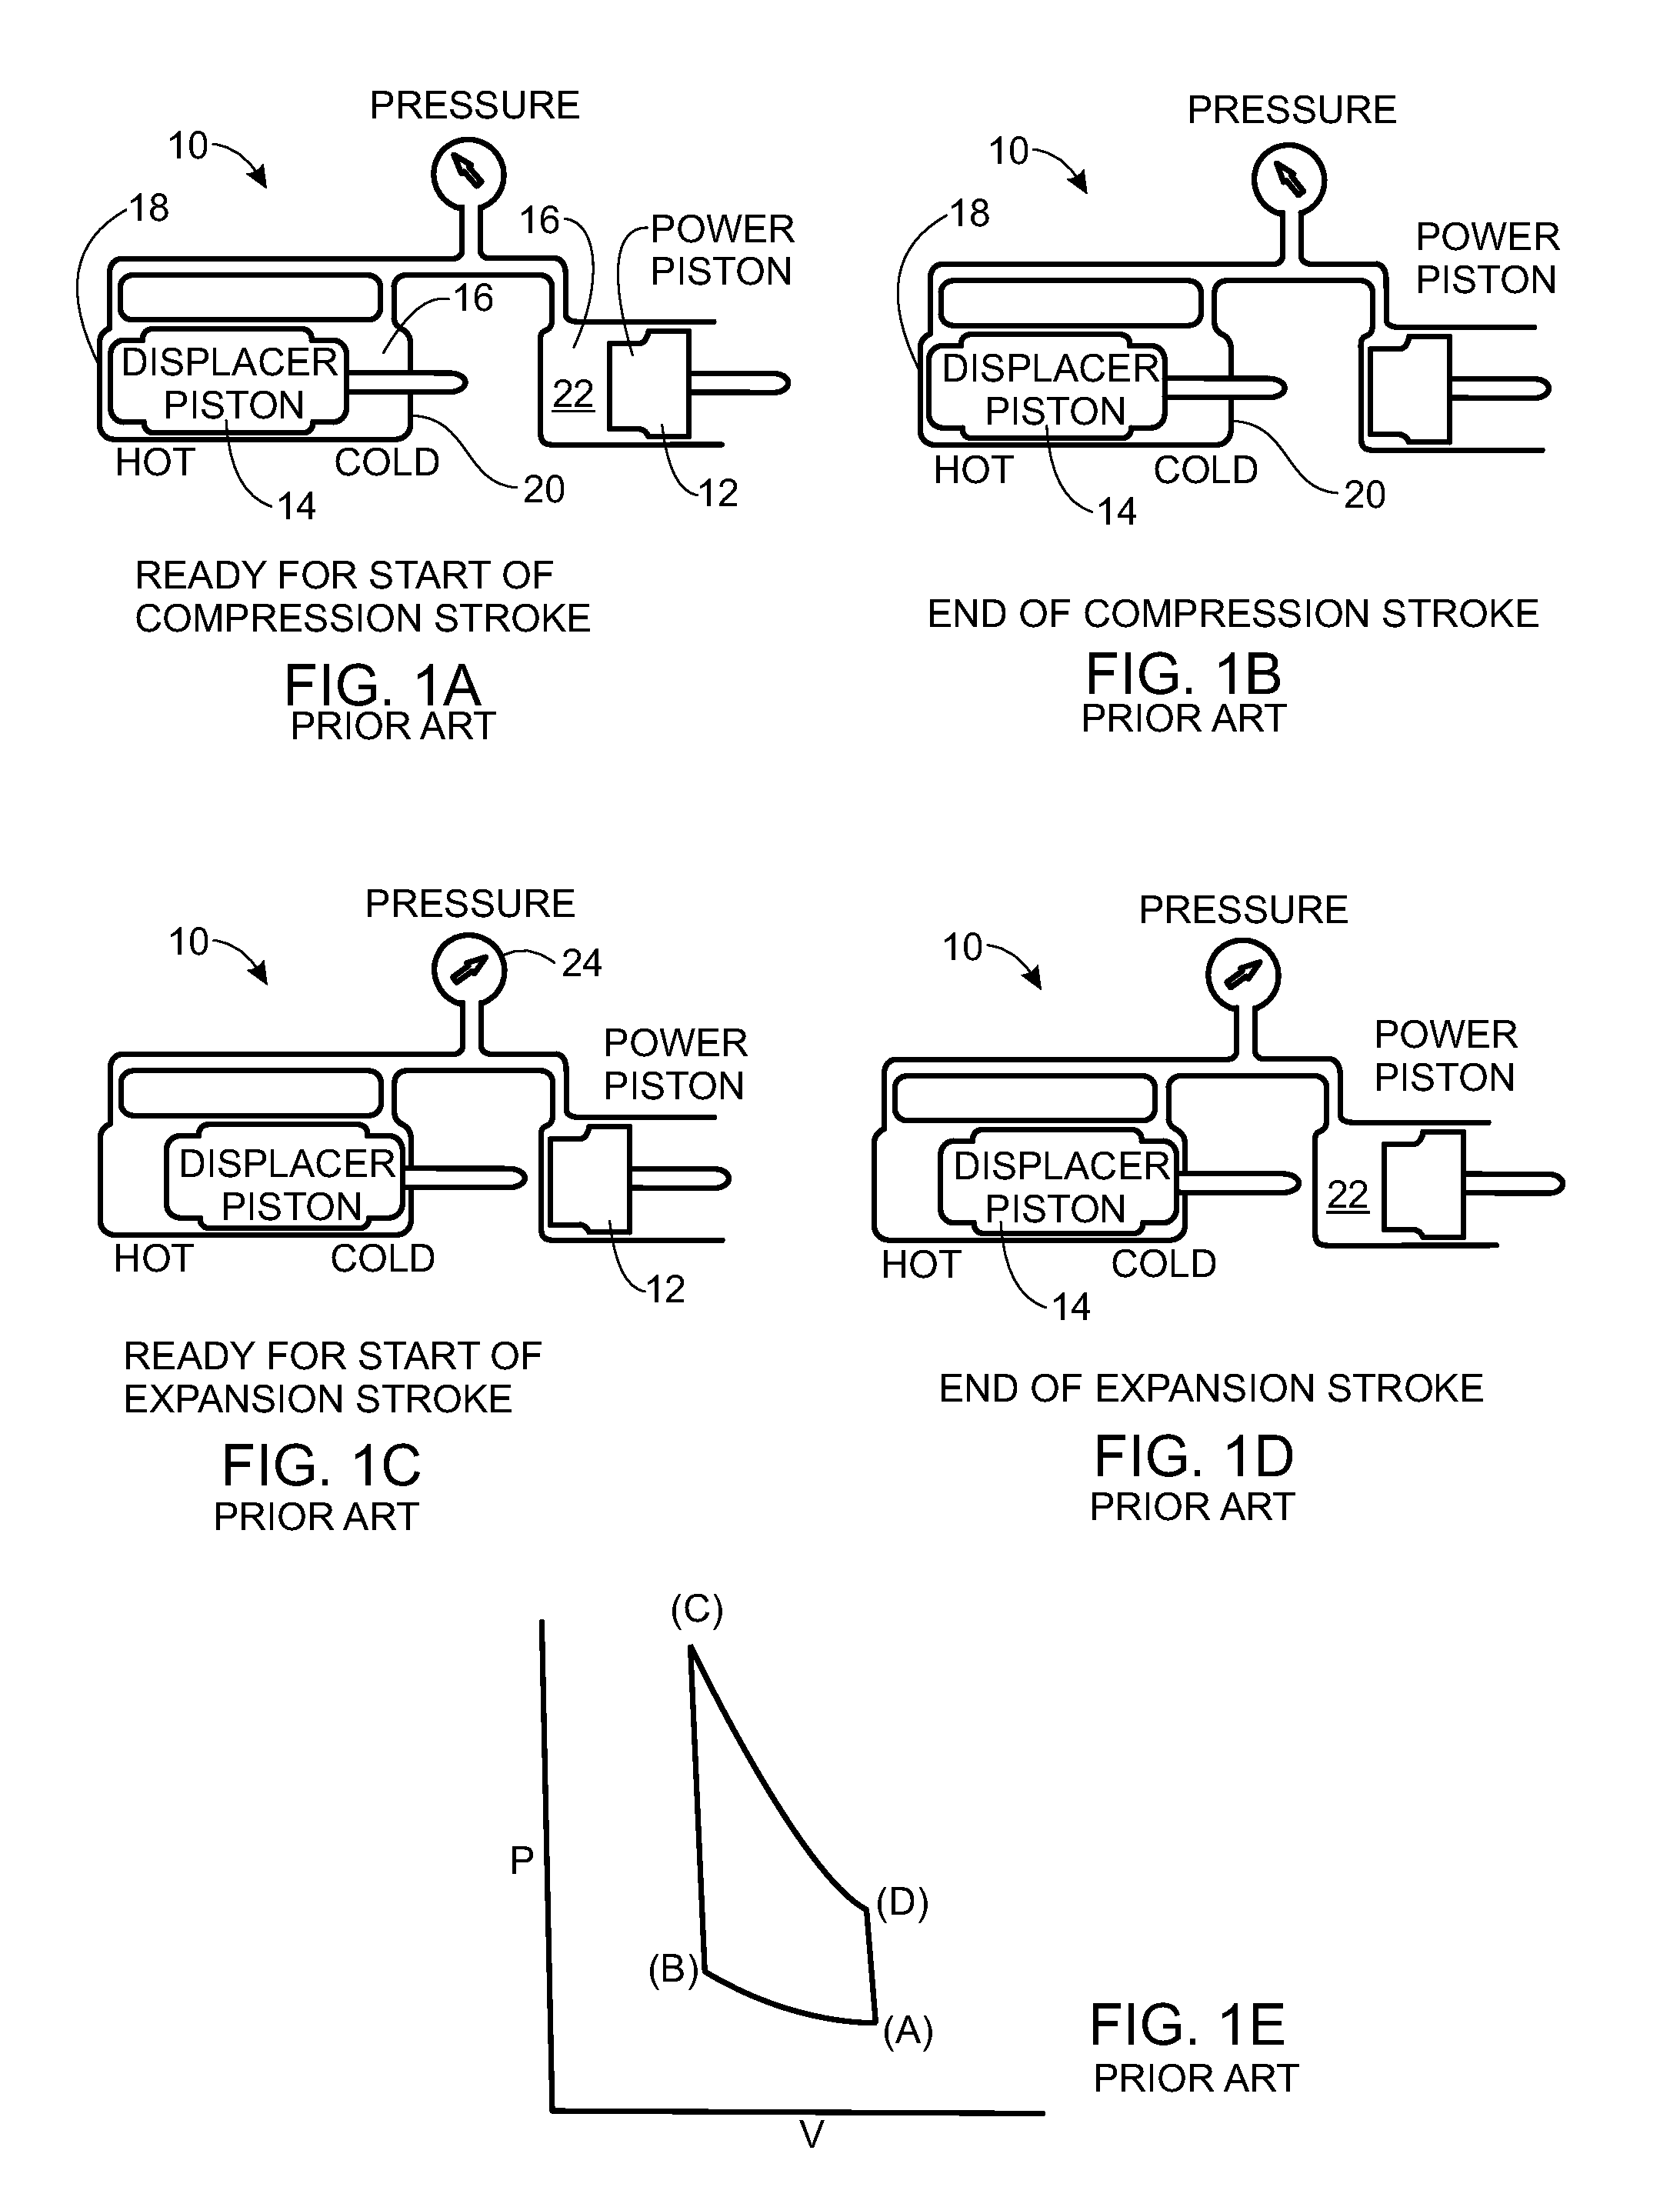 Stirling cycle machine with airlock pressure regulator and burner controls